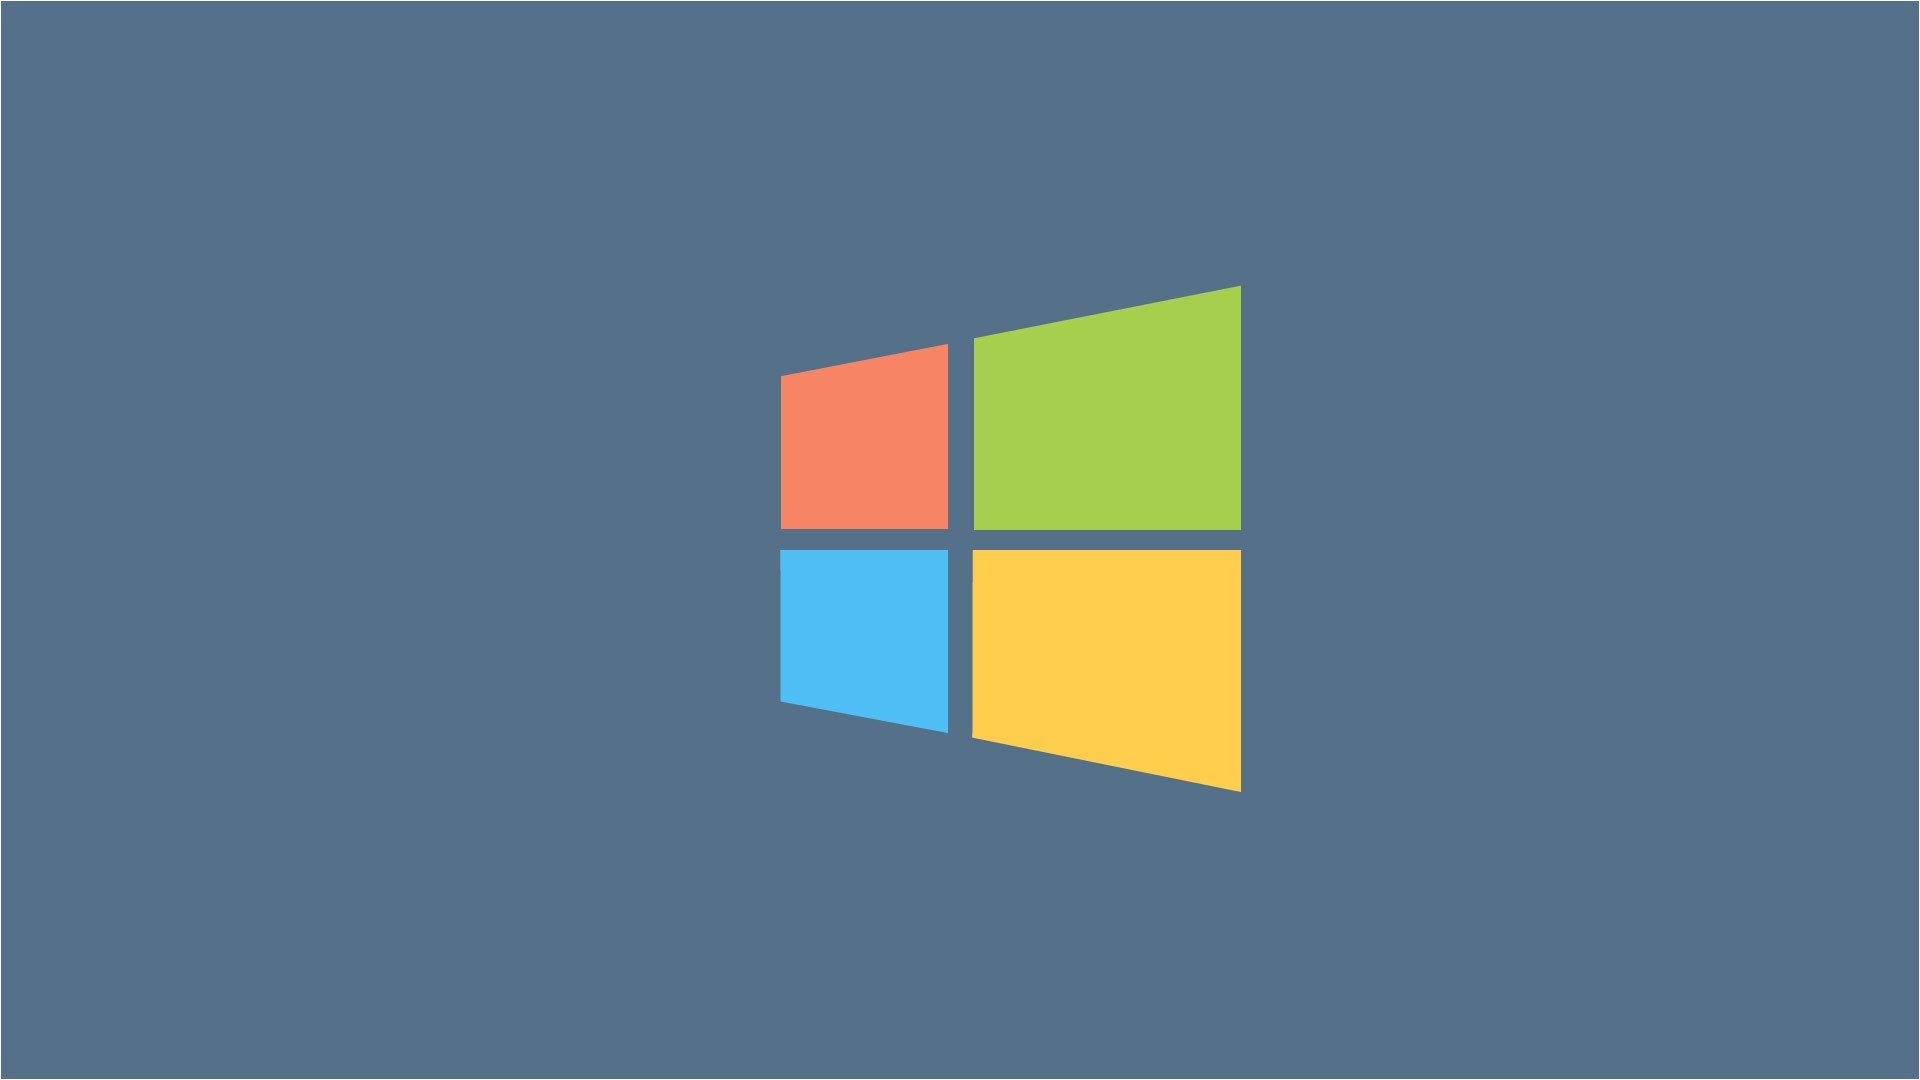 Windows 10 Microsoft Windows Wallpapers Hd Desktop And Mobile